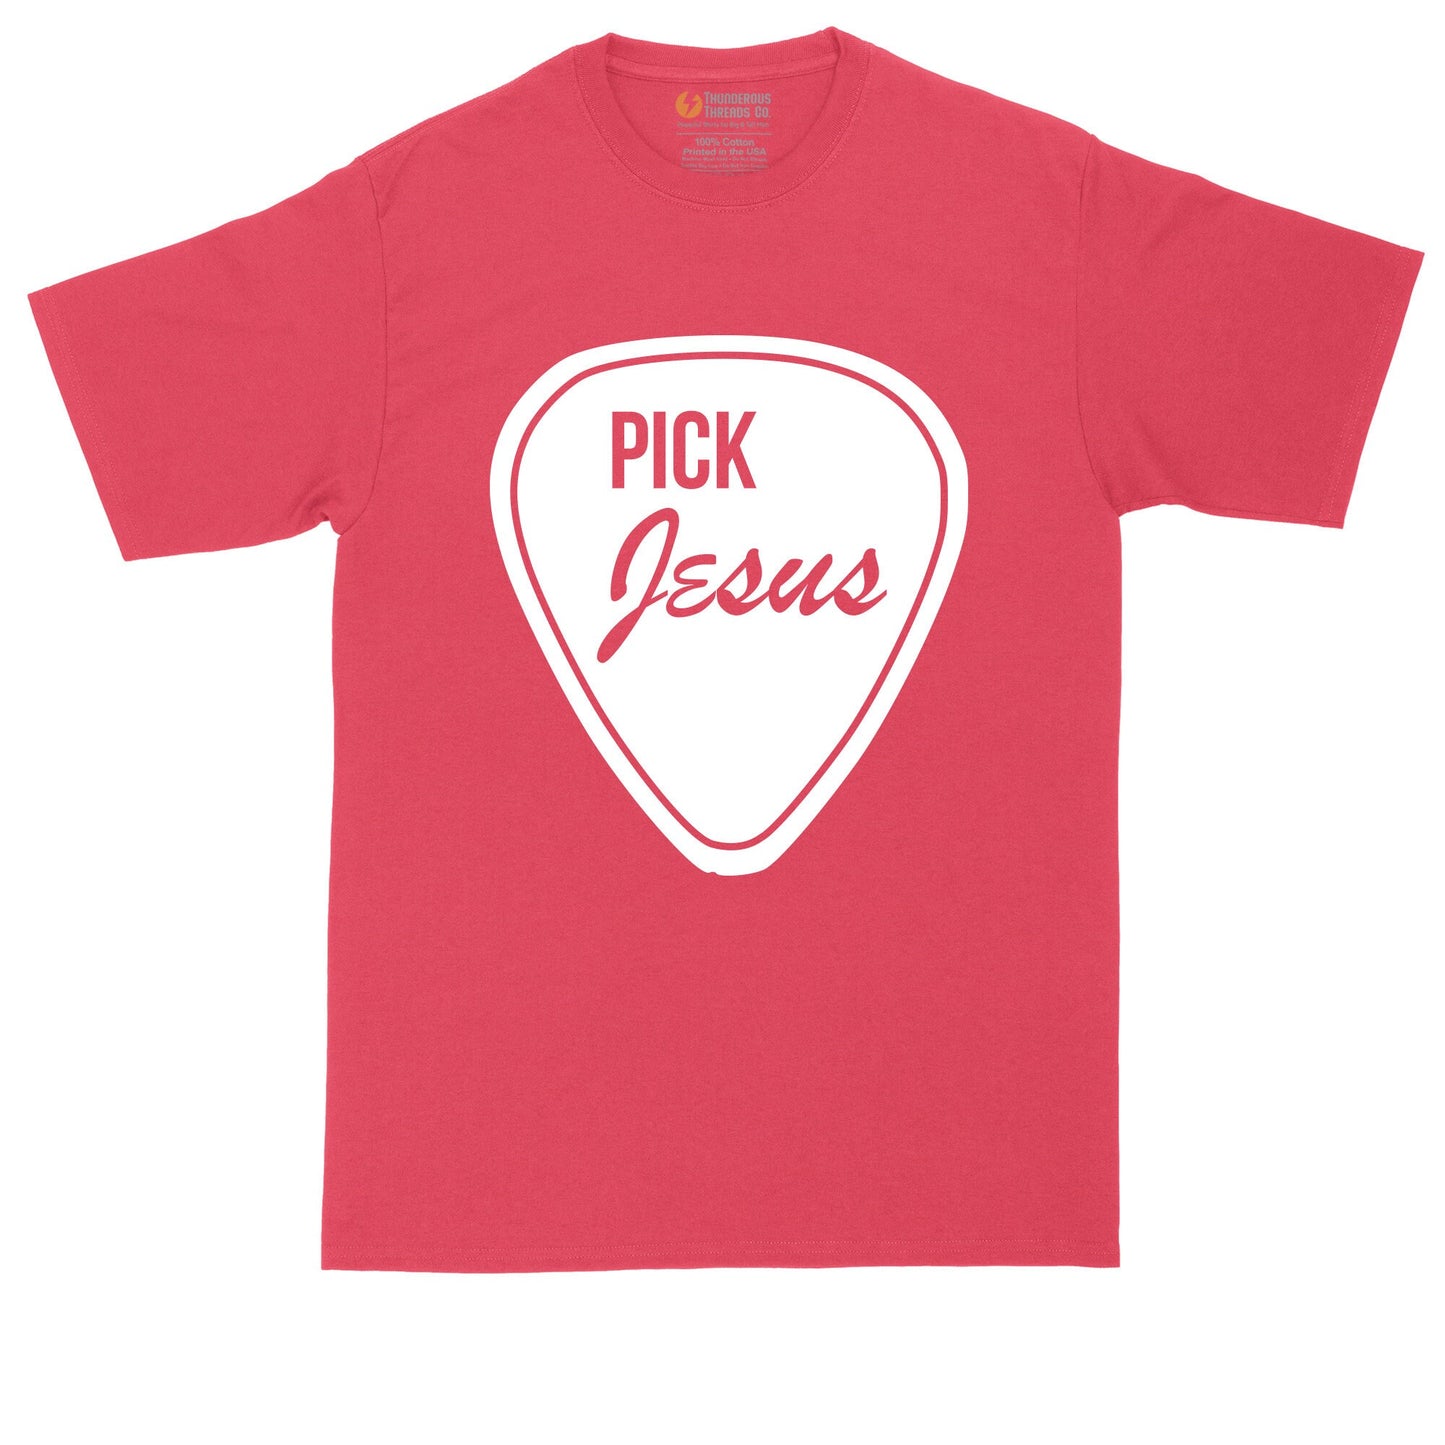 Pick Jesus | Mens Big and Tall T-Shirt | Funny Christian T-Shirt | Prayer Shirt | Worship Leader Shirt